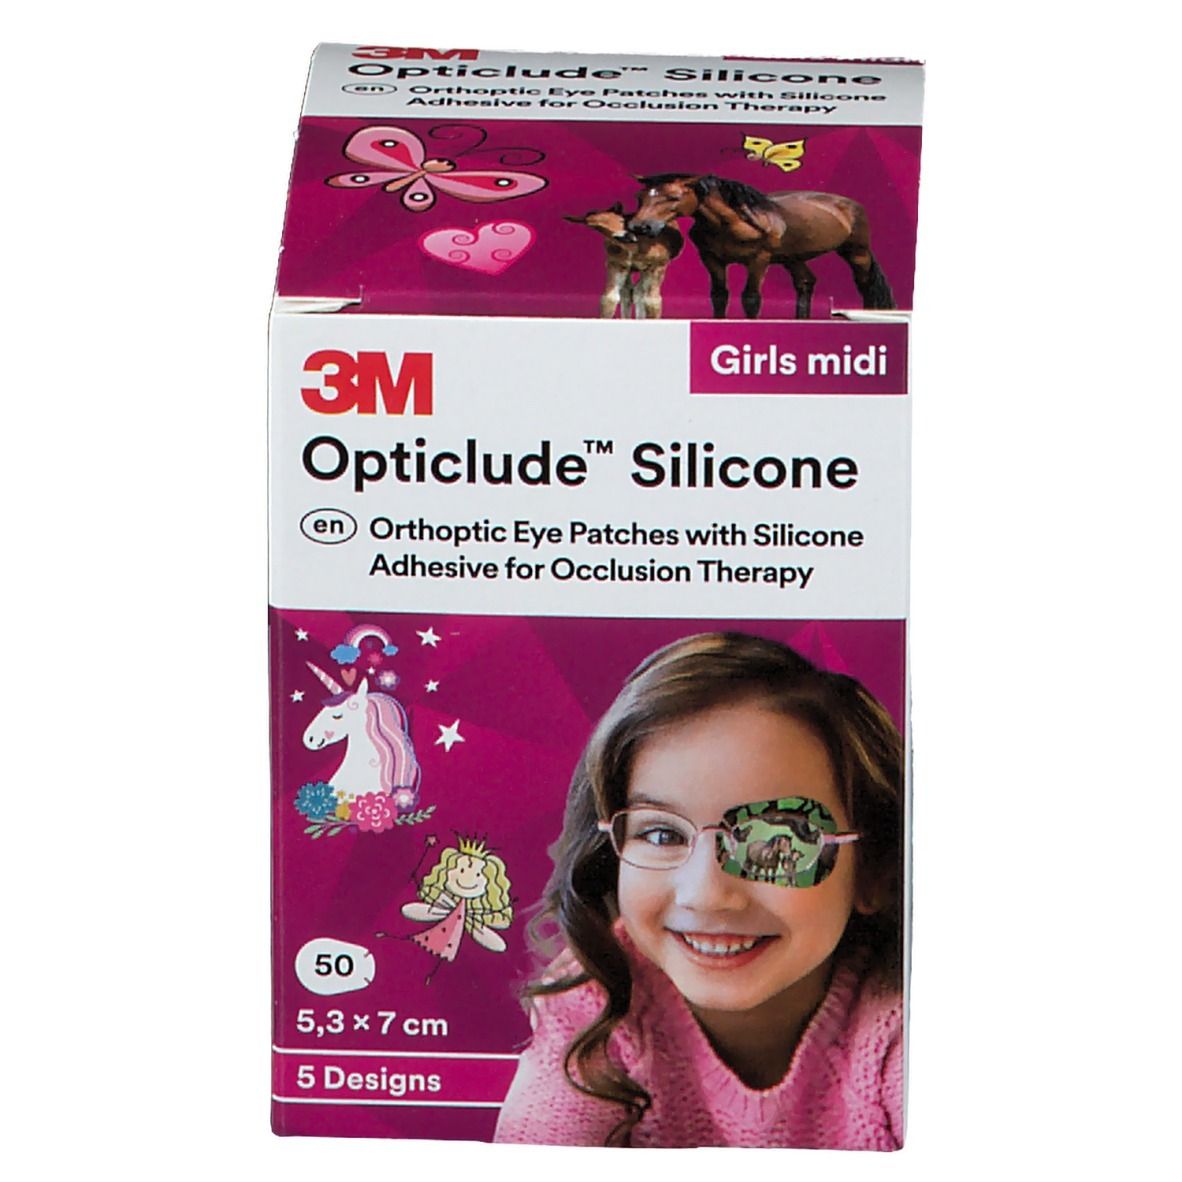 3M™ Opticlude™ Silicone Girls Midi 5,3 x 7,0 cm